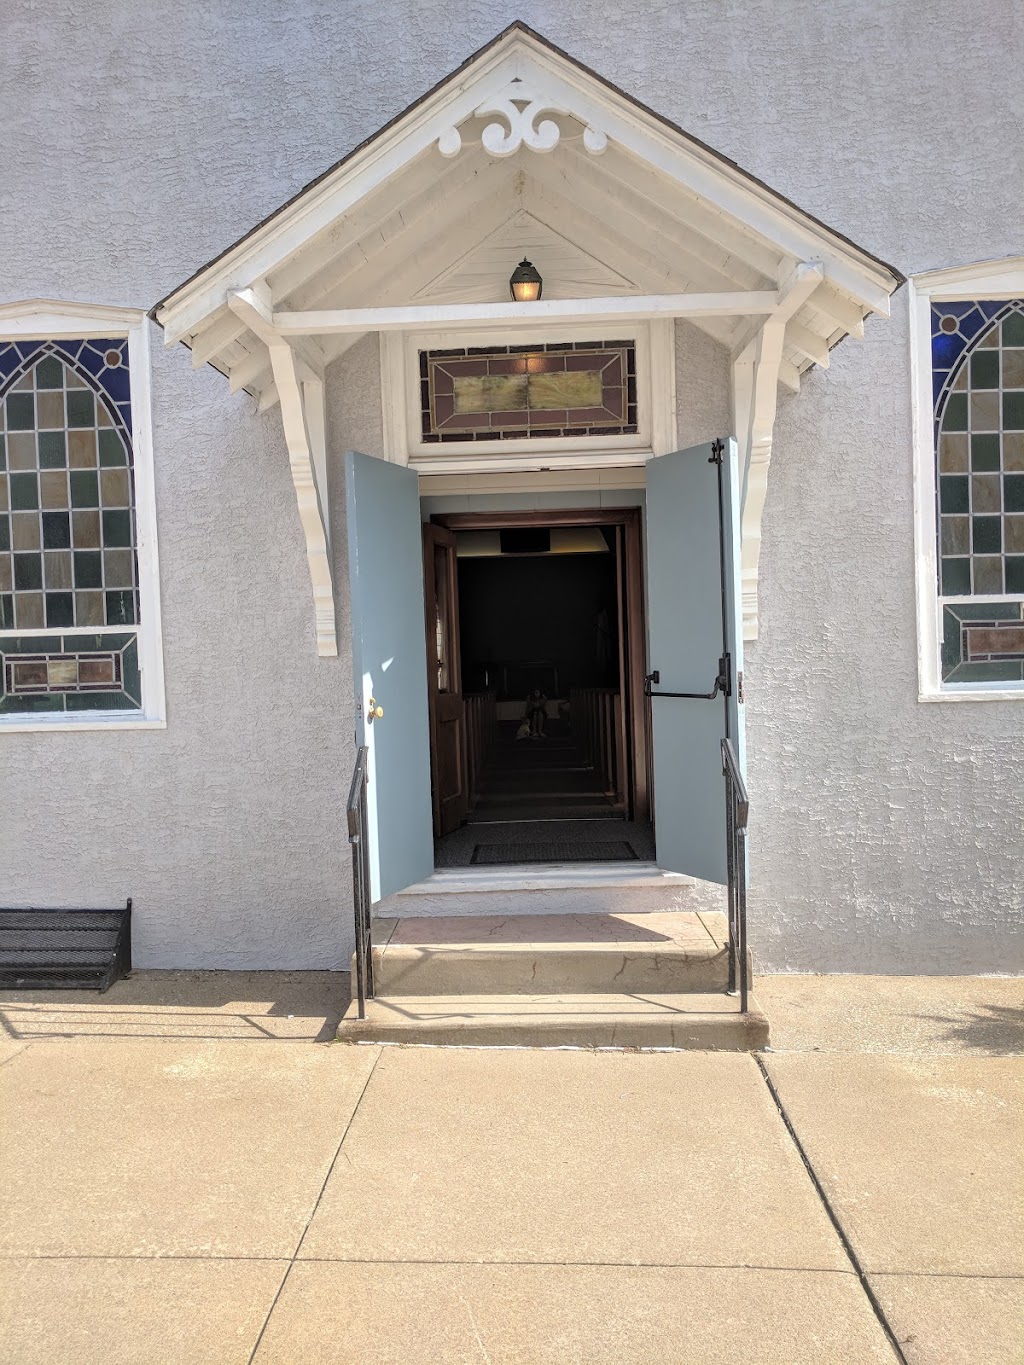 BlueStone Church | 425 Ford St, Conshohocken, PA 19428 | Phone: (484) 808-7597